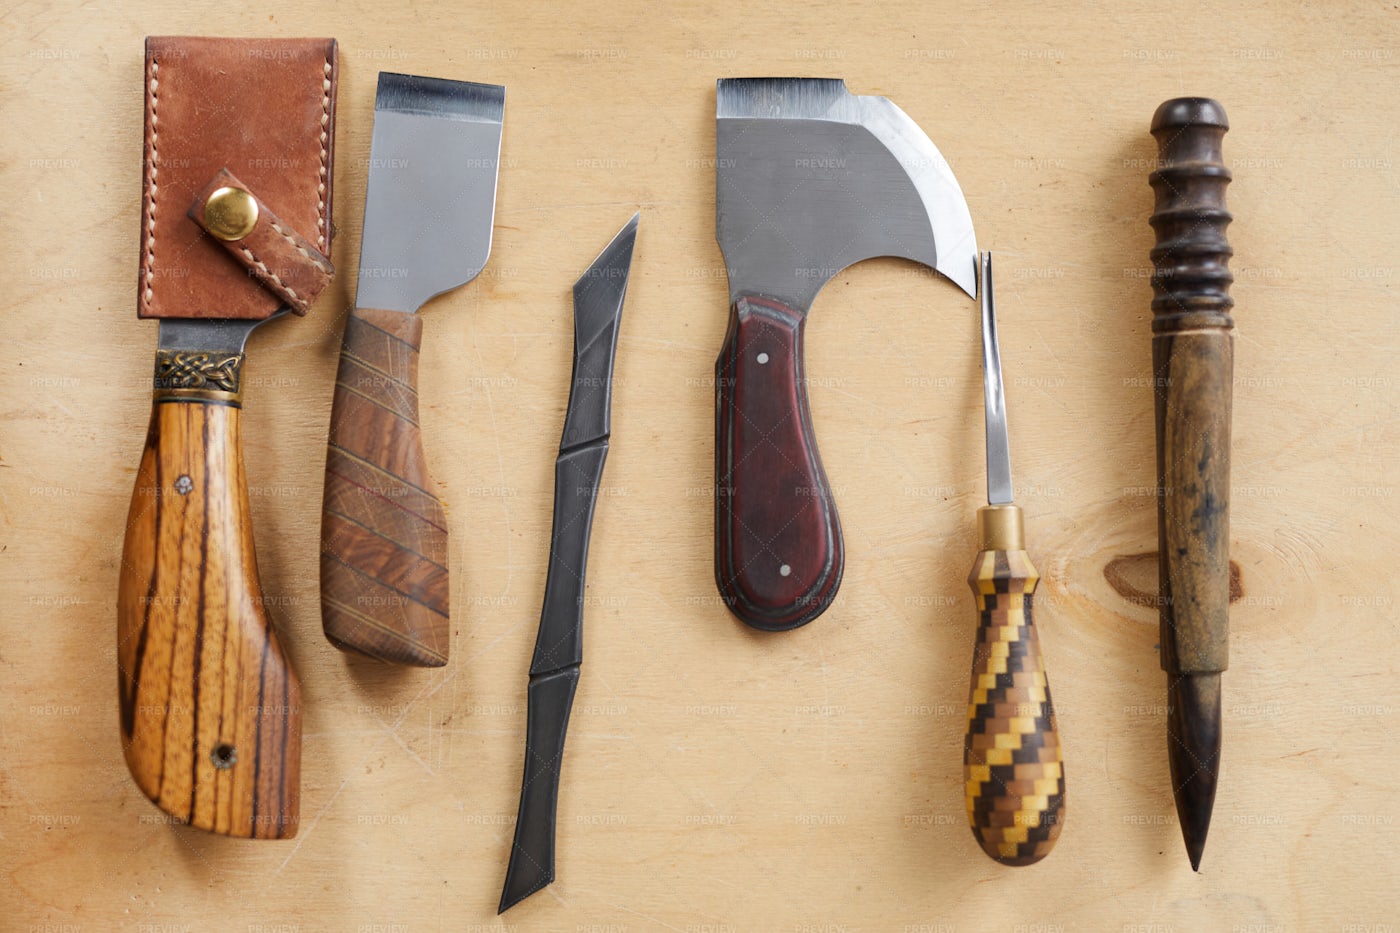 Leatherwork Tools On Table: Stock Photos